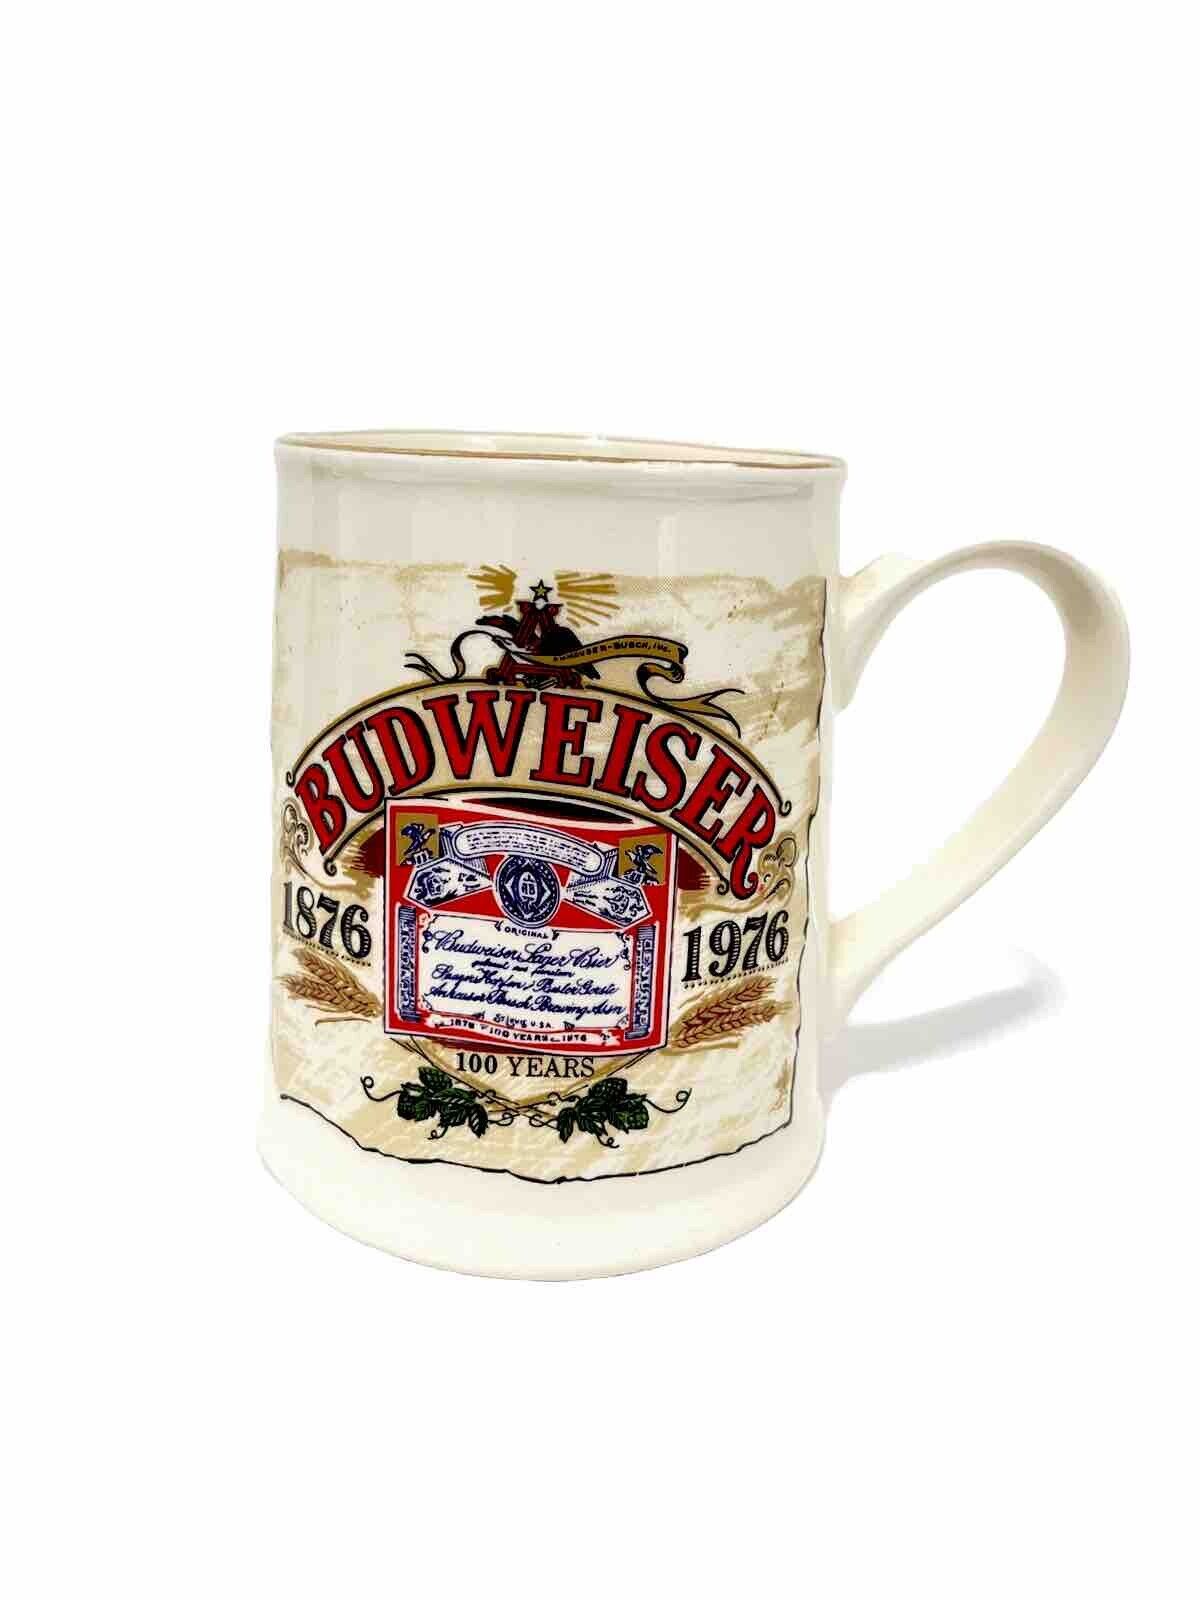 Budweiser Centennial Mug 100 Year Anniversary 1976 “Collectors - Very Rare”